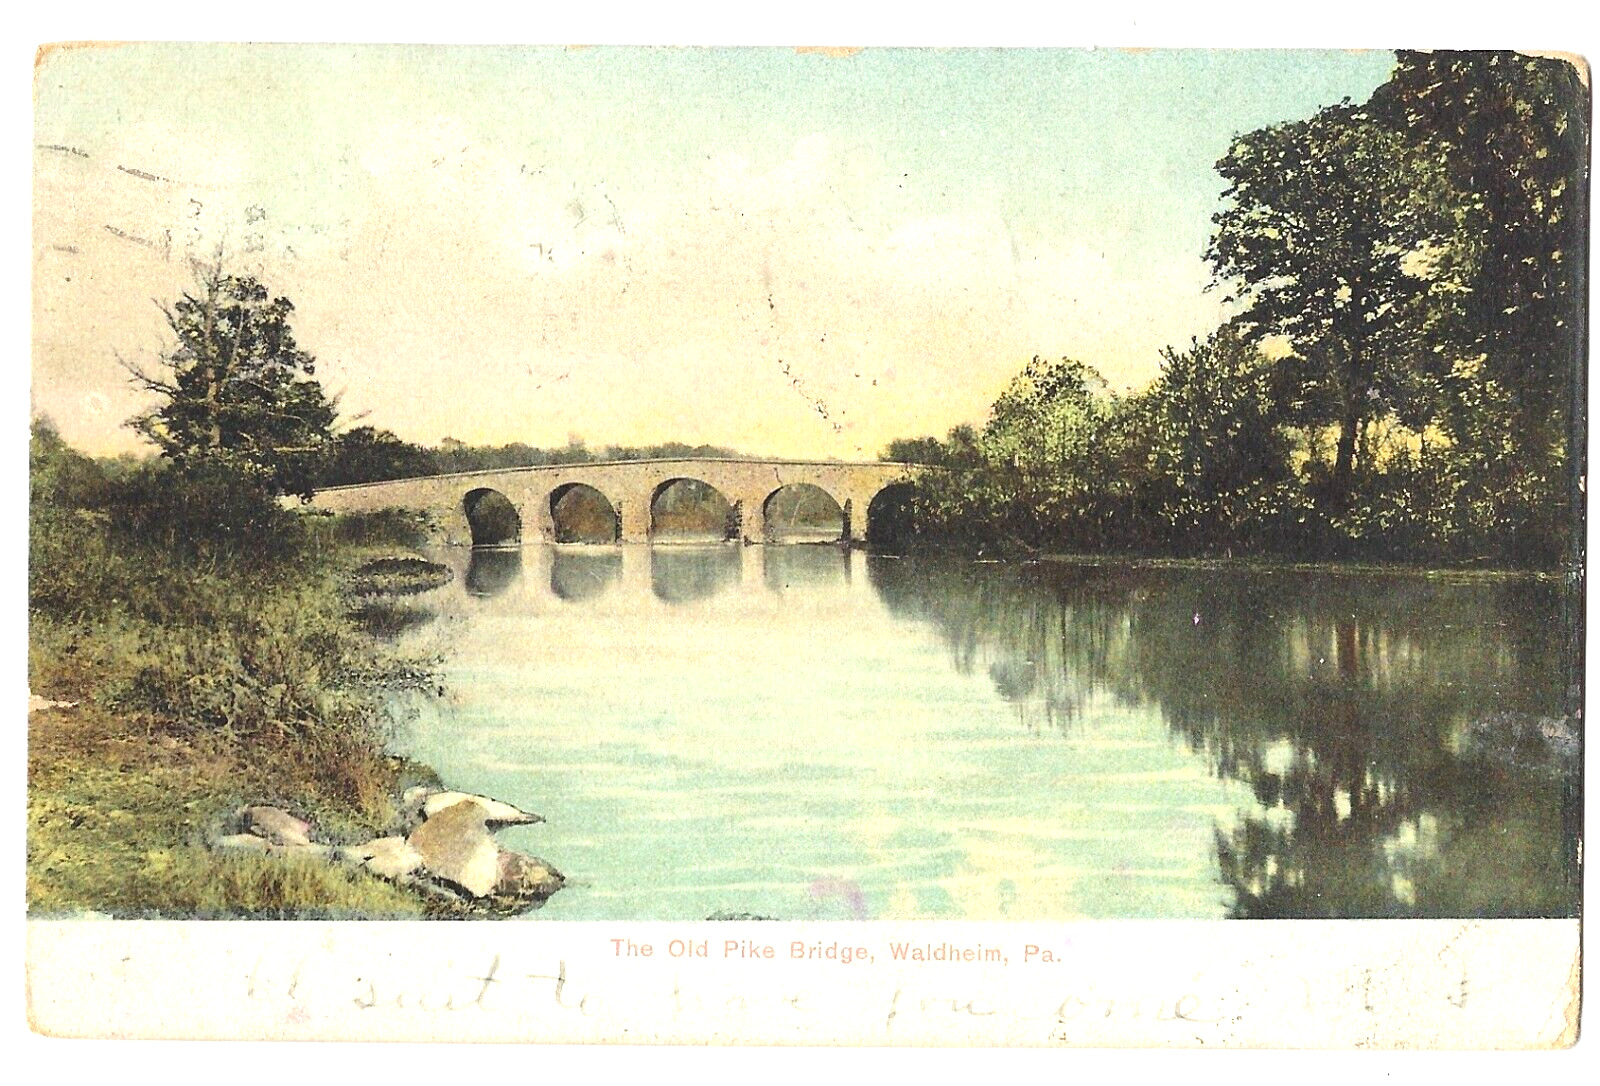 Waldheim PA The Old Pike Bridge over  Conewago Creek 1909